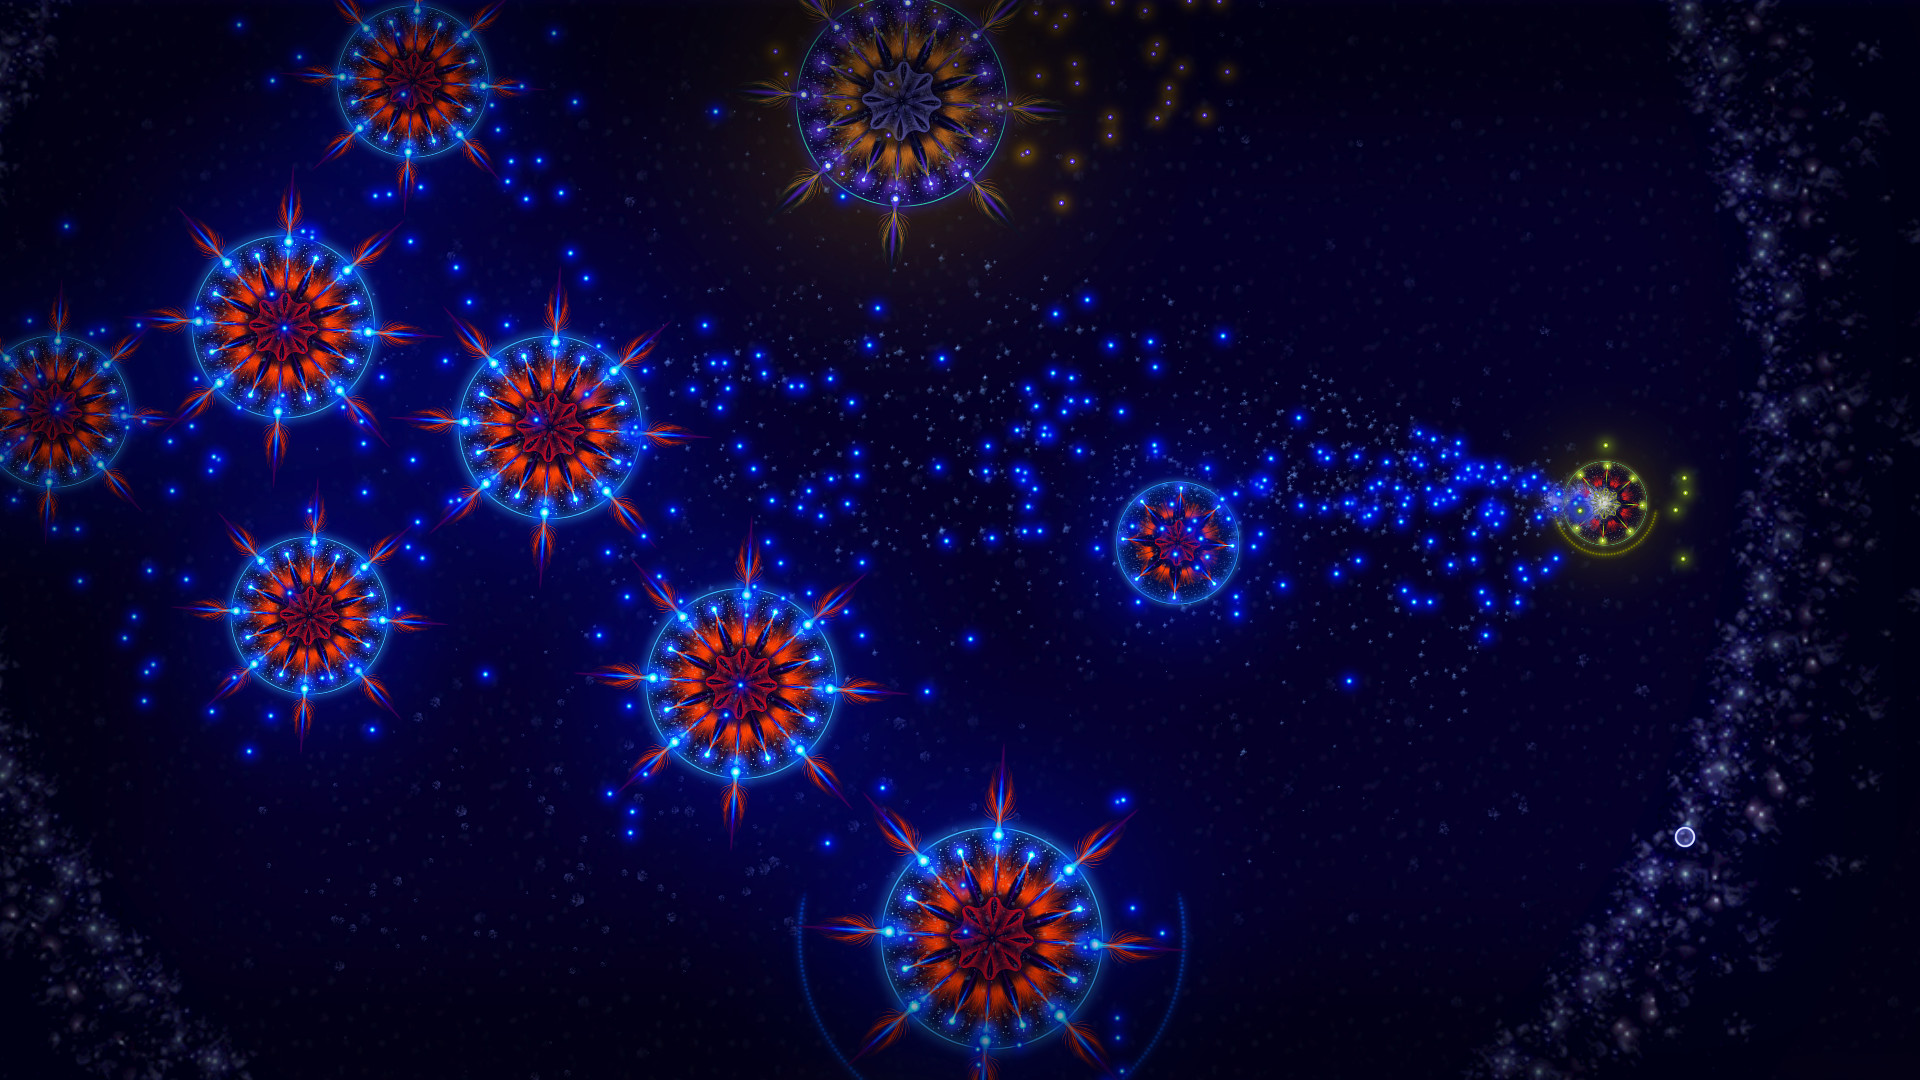 Microcosmum: survival of cells - Random levels screenshot